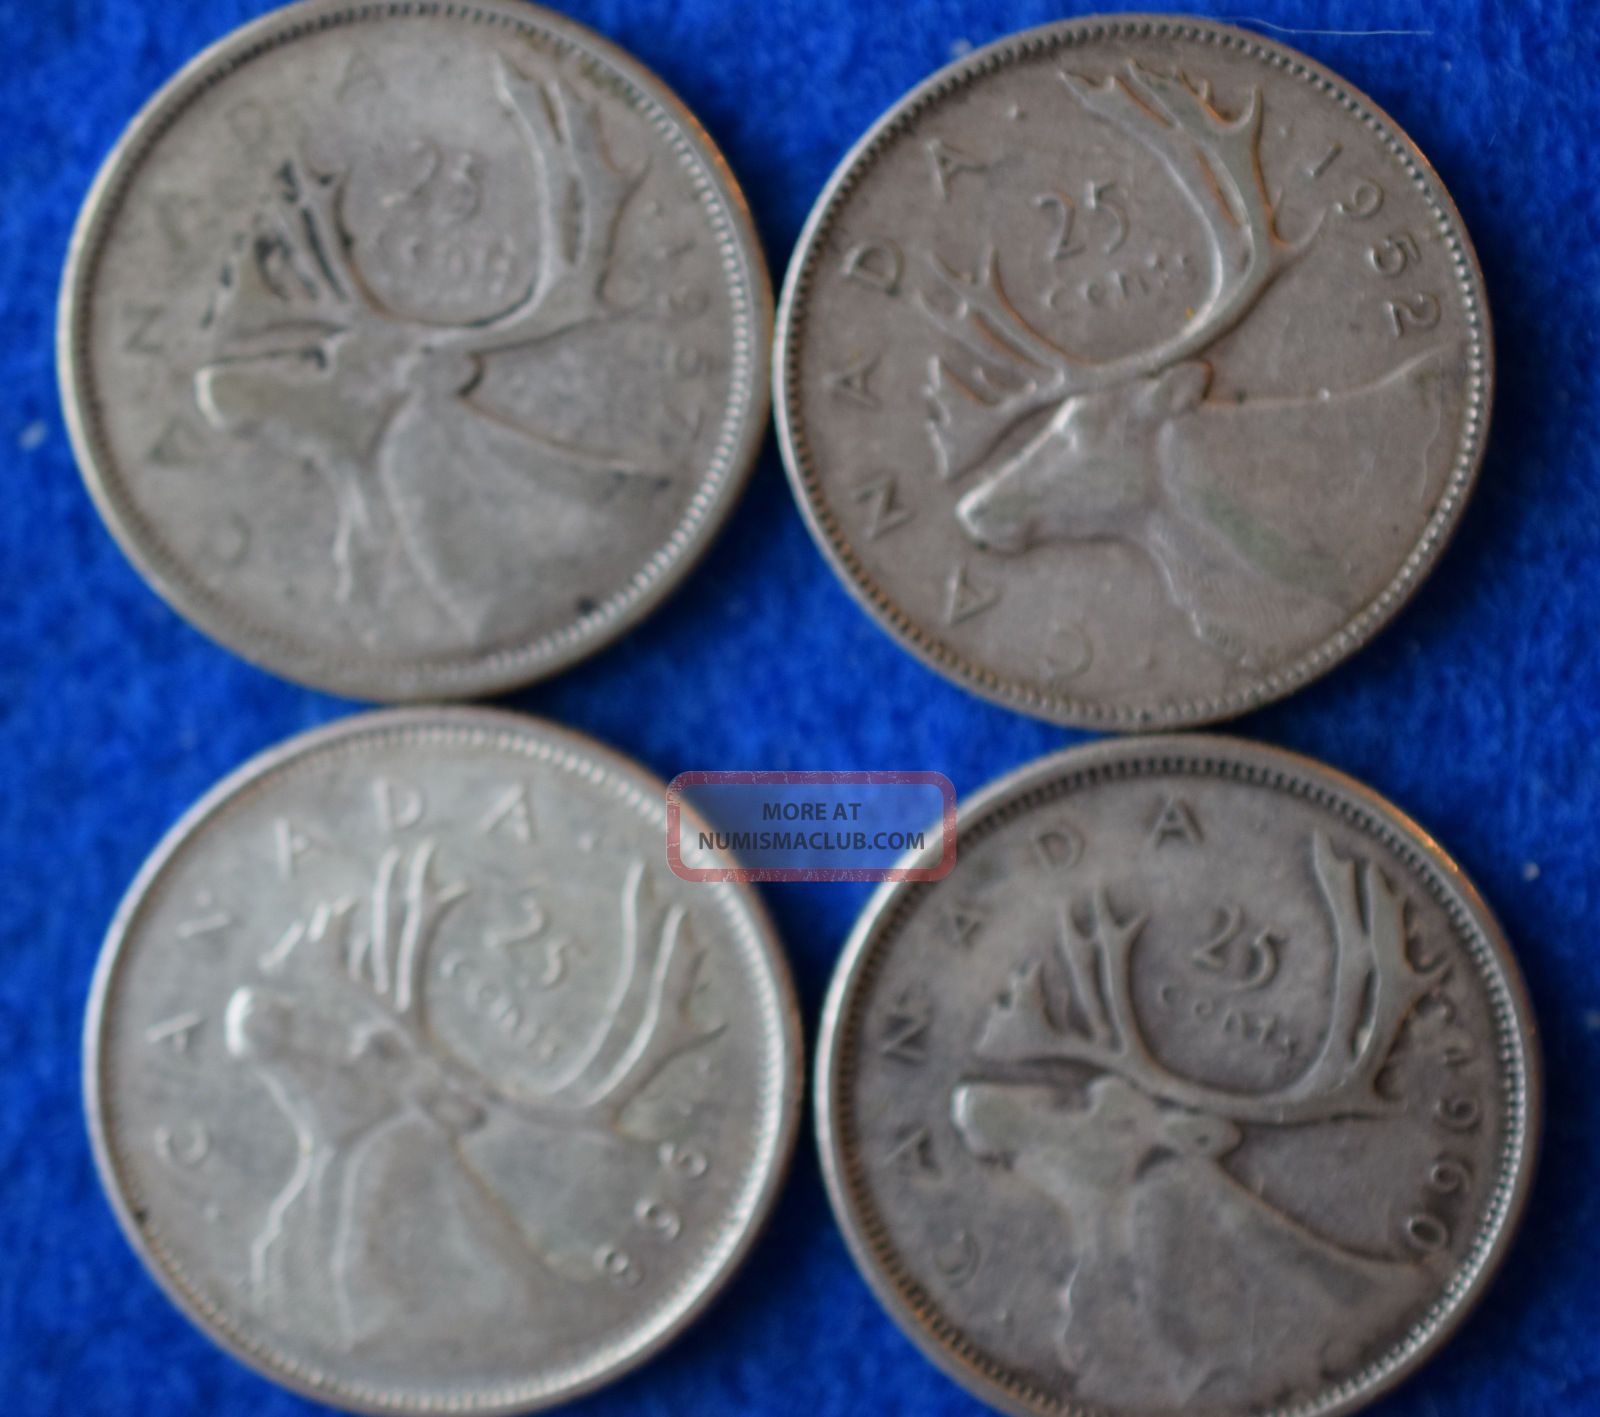 049 80 Silver Canadian Quarters George Vi & Elizabeth Ii You Grade Coins: Canada photo